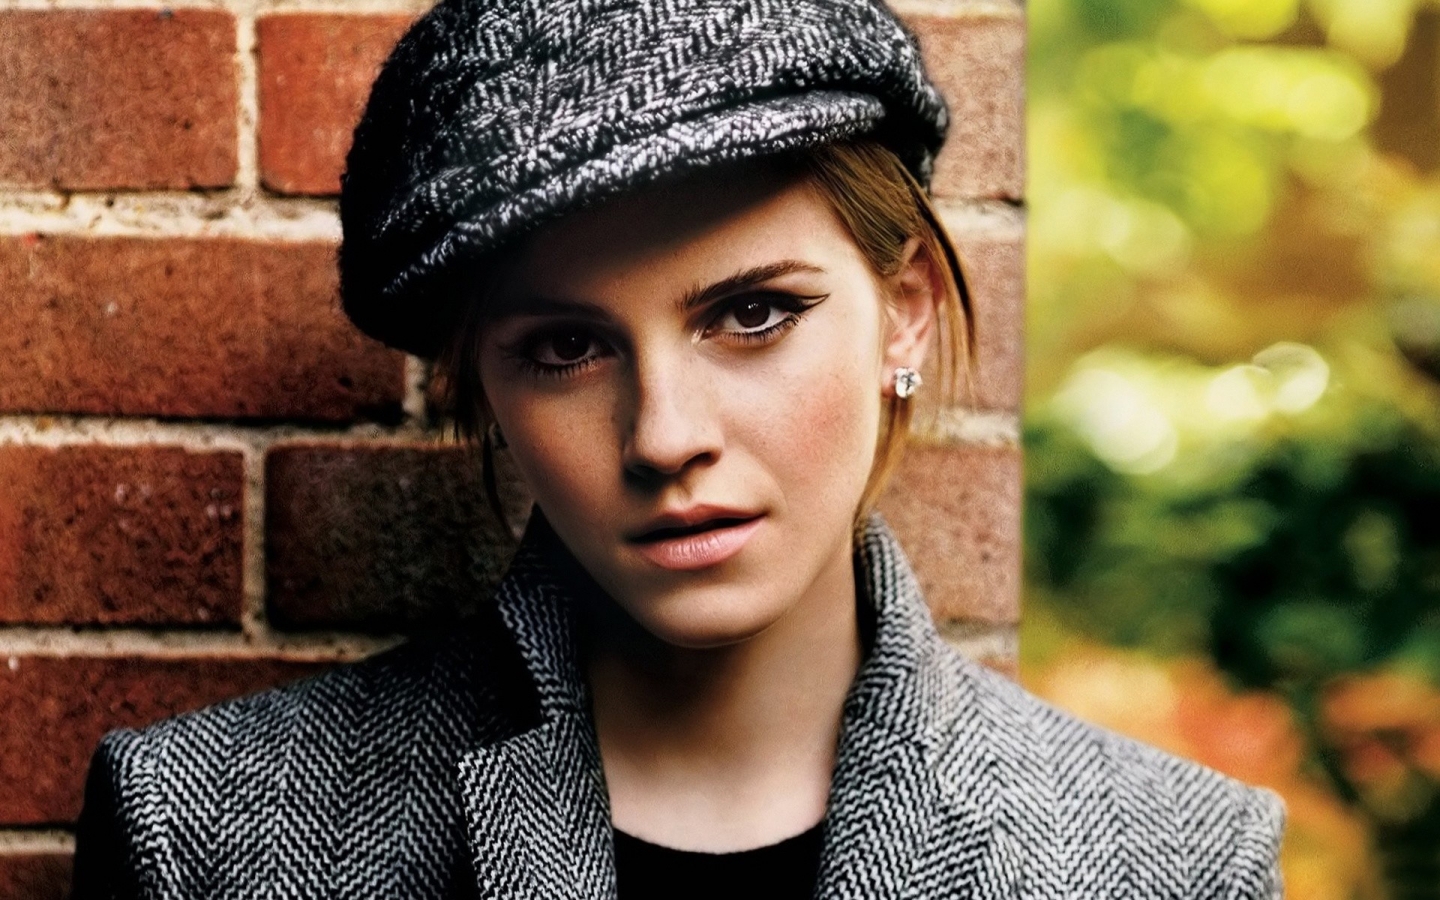 Cool Emma Watson for 1440 x 900 widescreen resolution